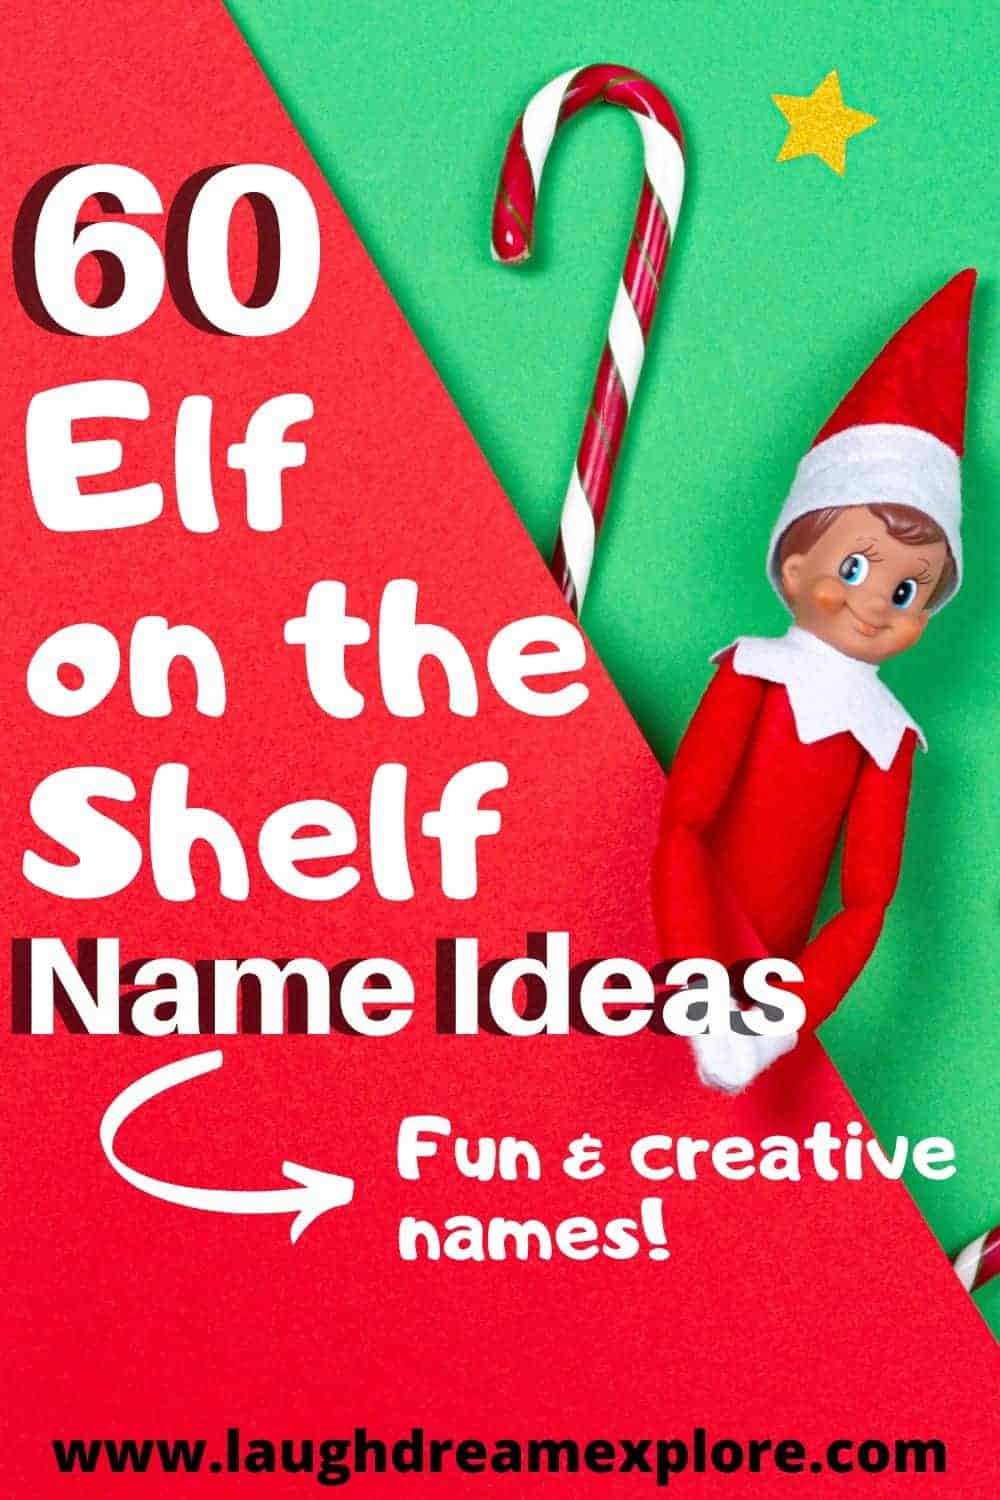 Names for elf on the shelf